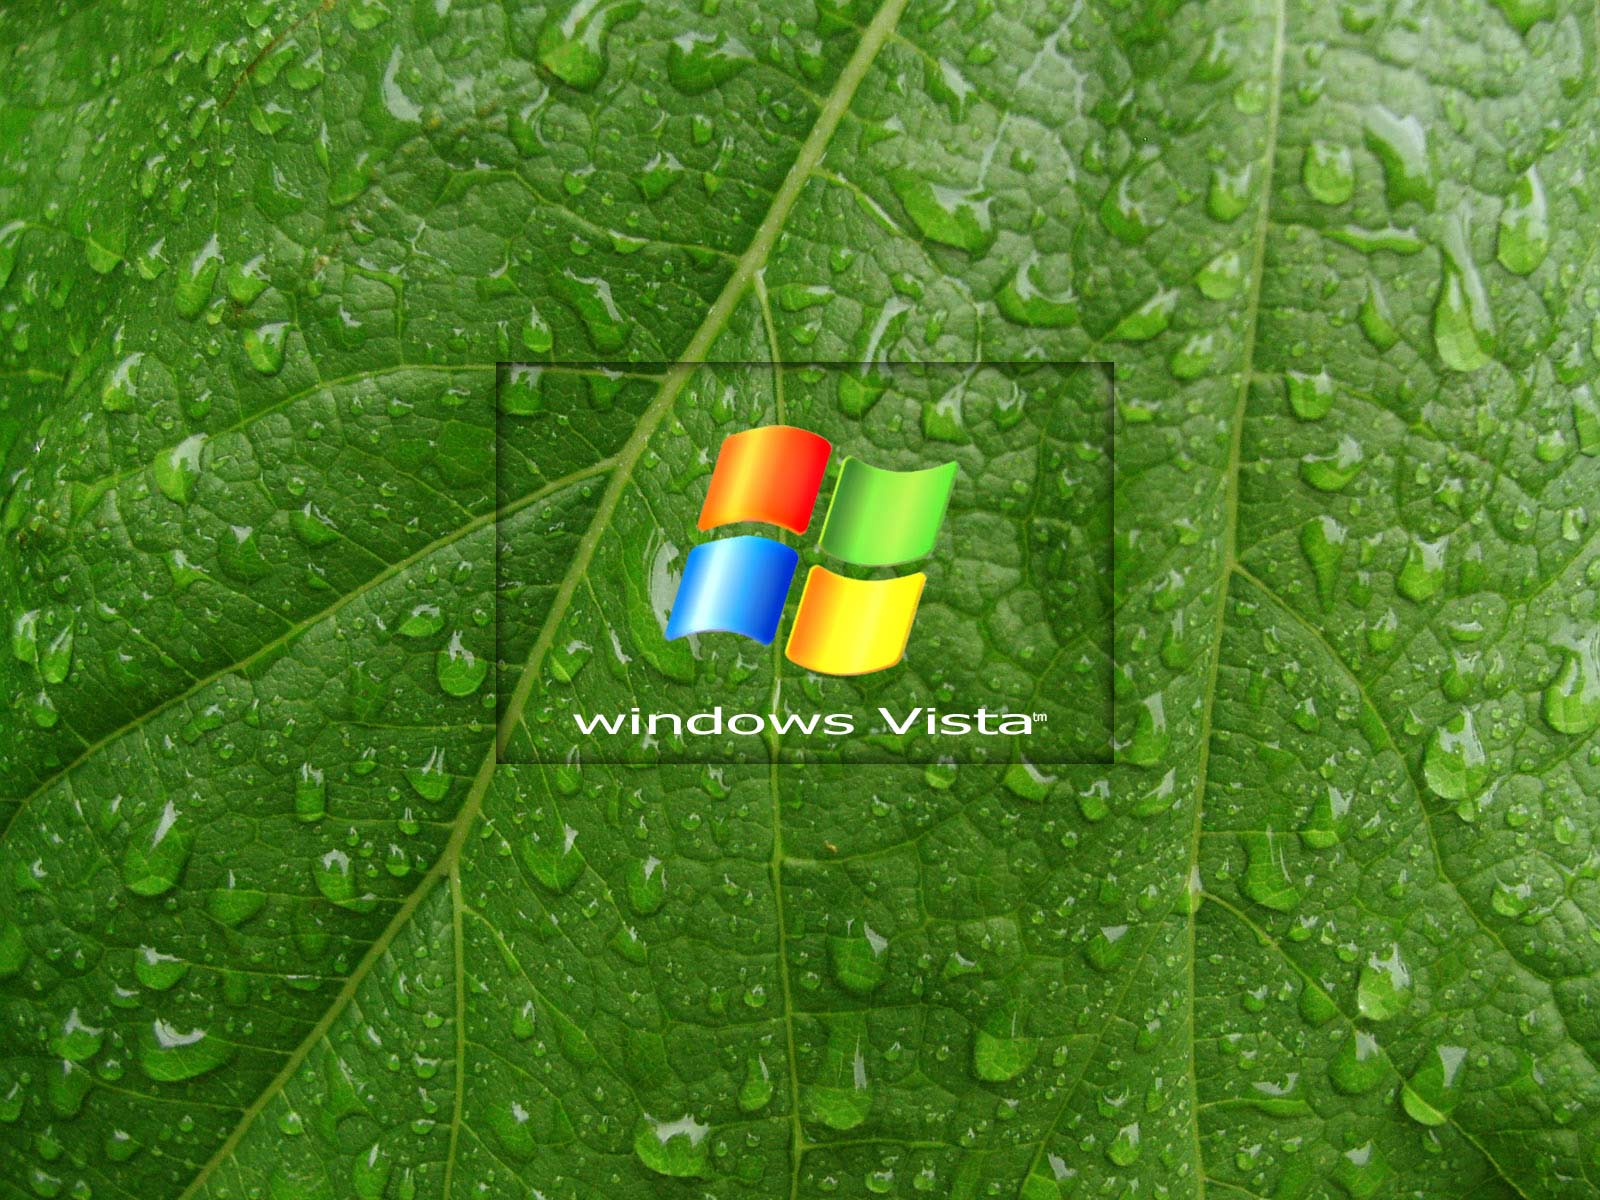 Desktop Wallpaper · Gallery · Computers · Windows Vista | Free ...